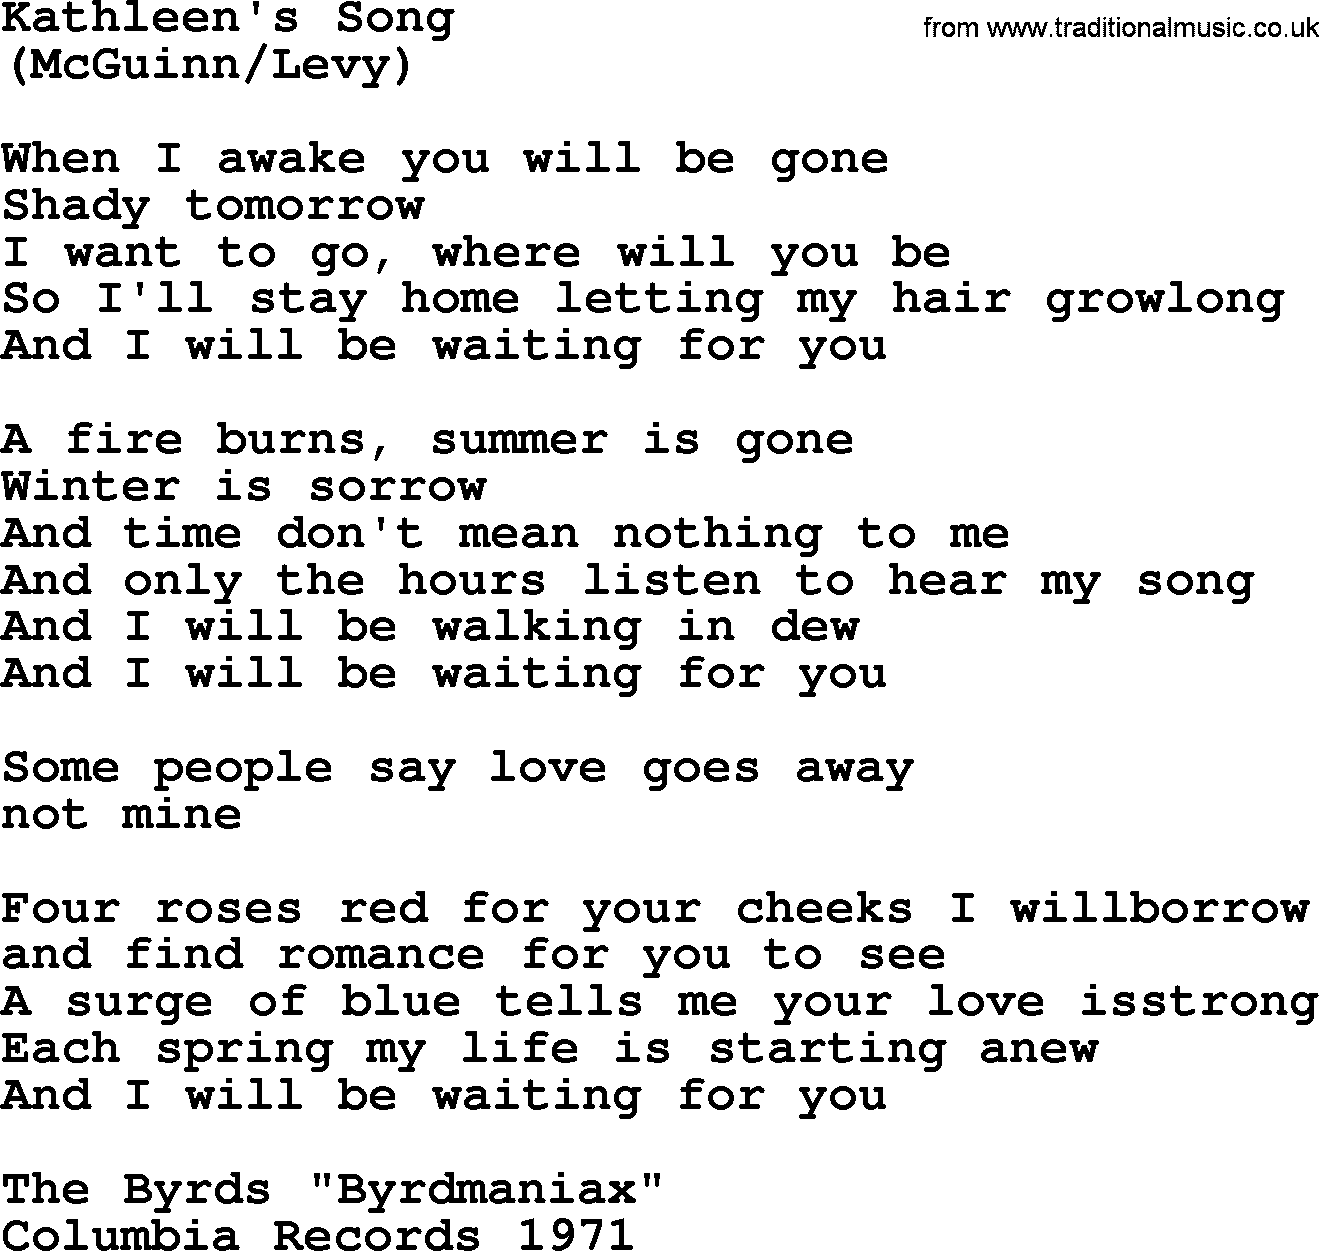 The Byrds song Kathleen's Song, lyrics